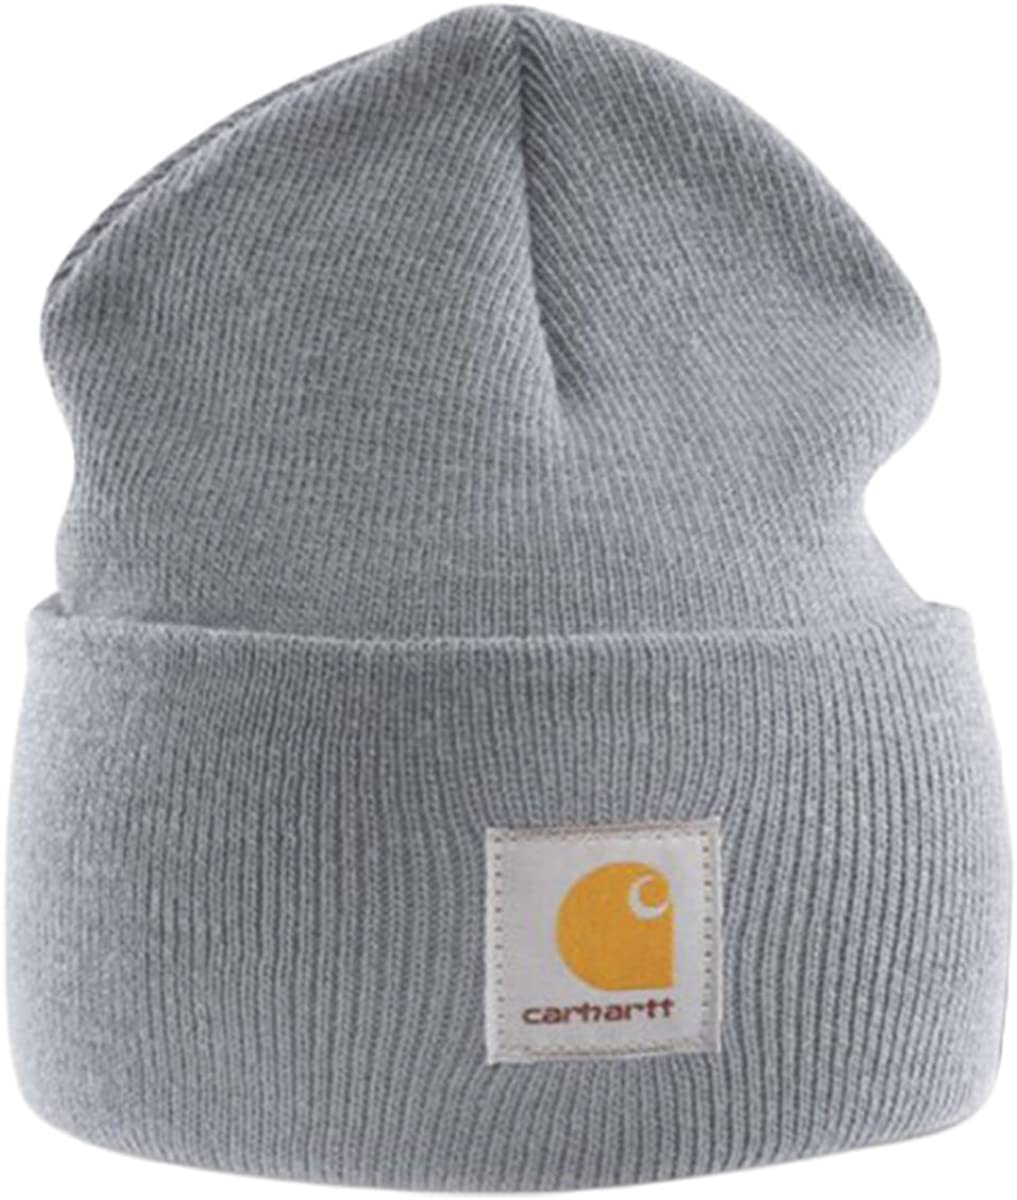 Carhartt Acrylic Watch Hat Dark Grey Heather Bonnets : Snowleader